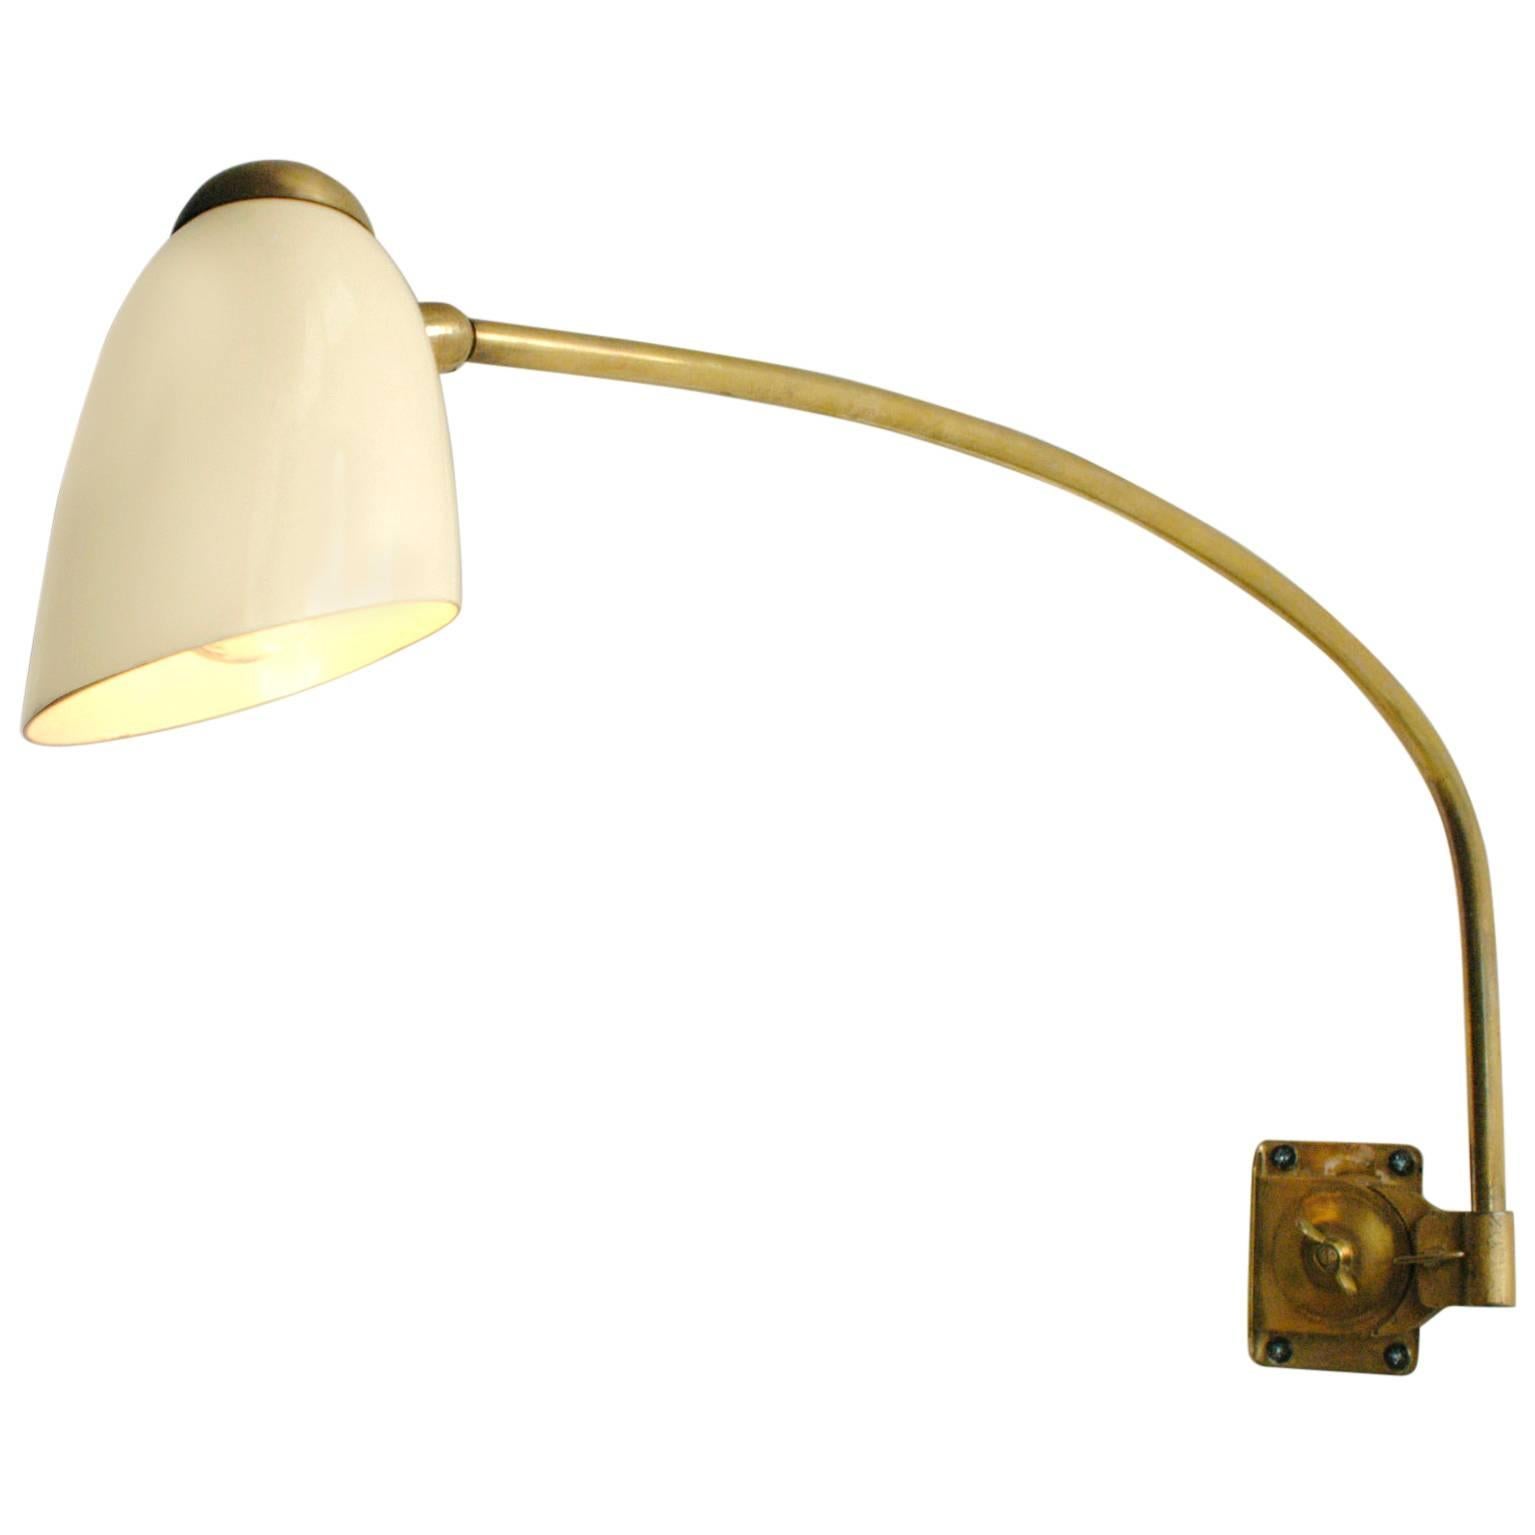 Italian Midcentury Brass Wall Light by Arteluce